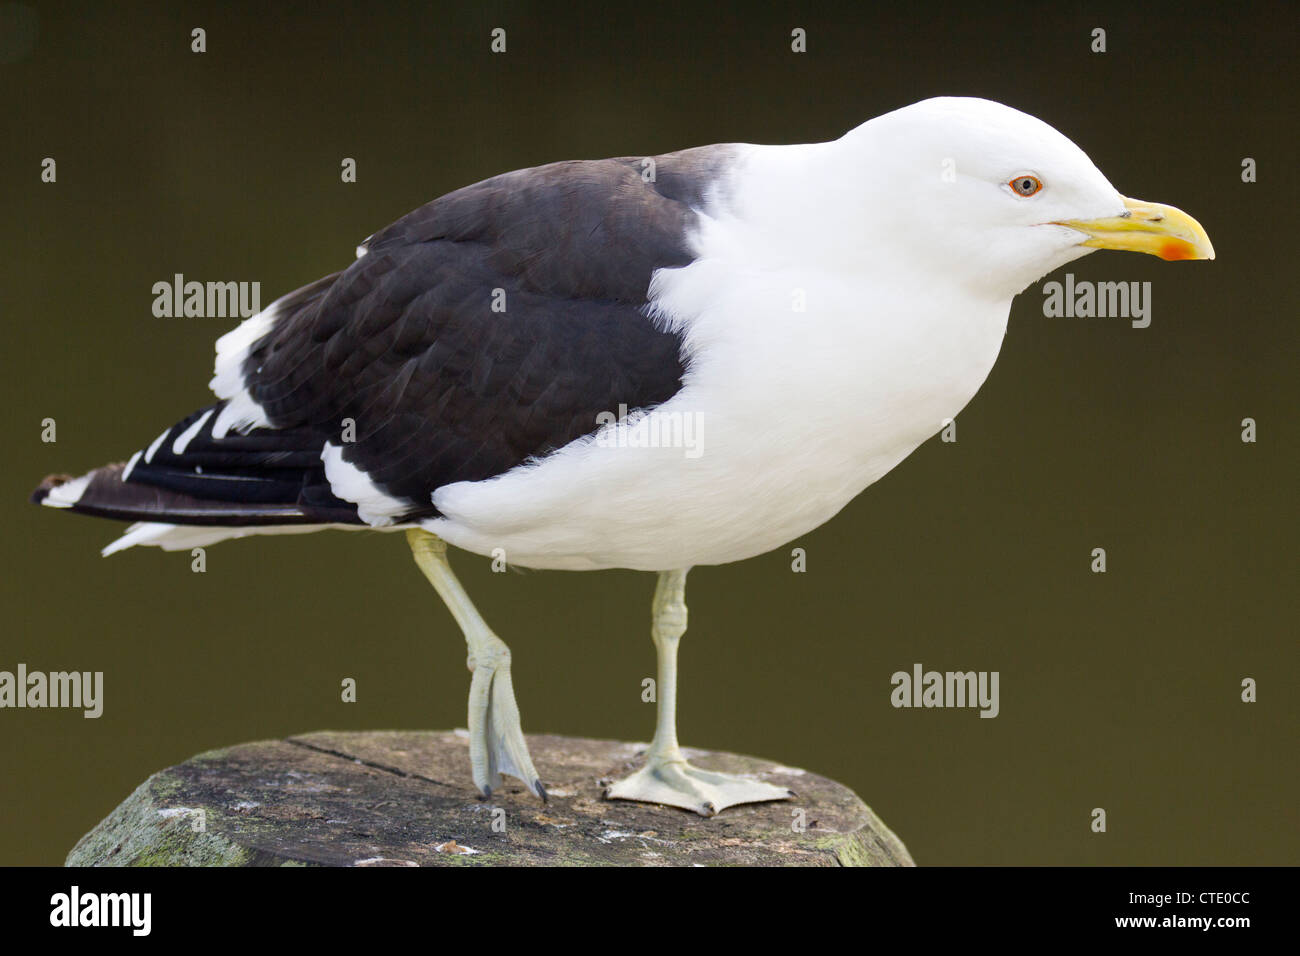 Black-backed seagull at Whangarei, New Zealand Stock Photo